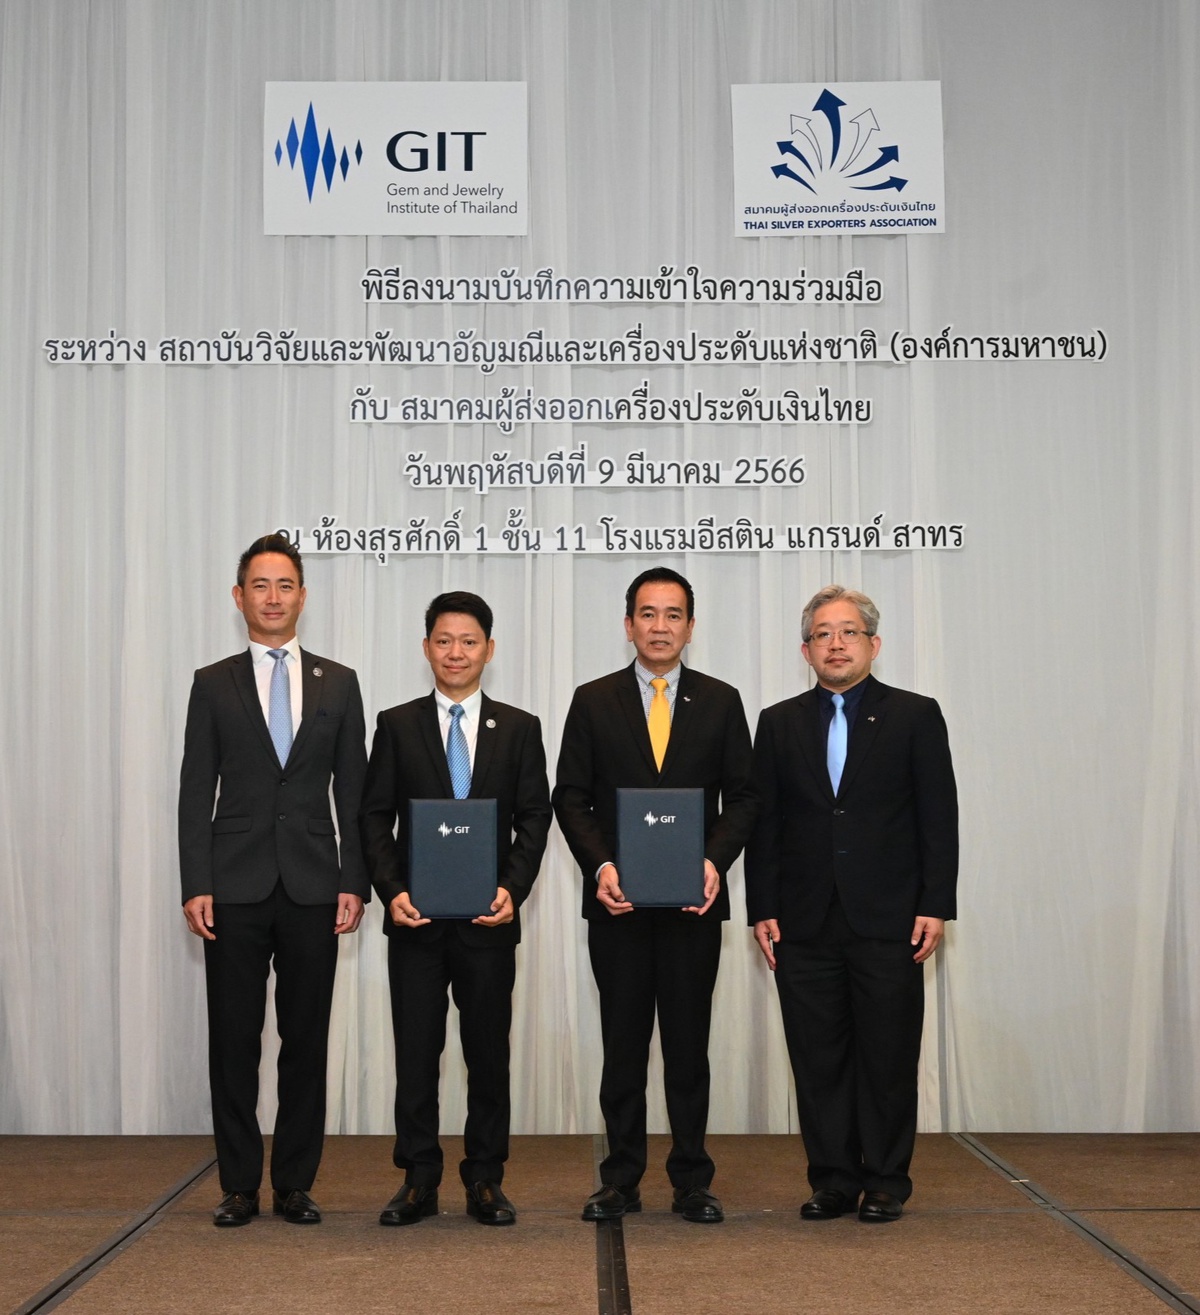 GIT จับมือสมาคมผู้ส่งออกเครื่องประดับเงินไทย ผลักดันอุตสาหกรรมเครื่องประดับเงินไทย ดำเนินธุรกิจอย่างมีธรรมาภิบาลและความยั่งยืนต่อสังคมและสิ่งแวดล้อม